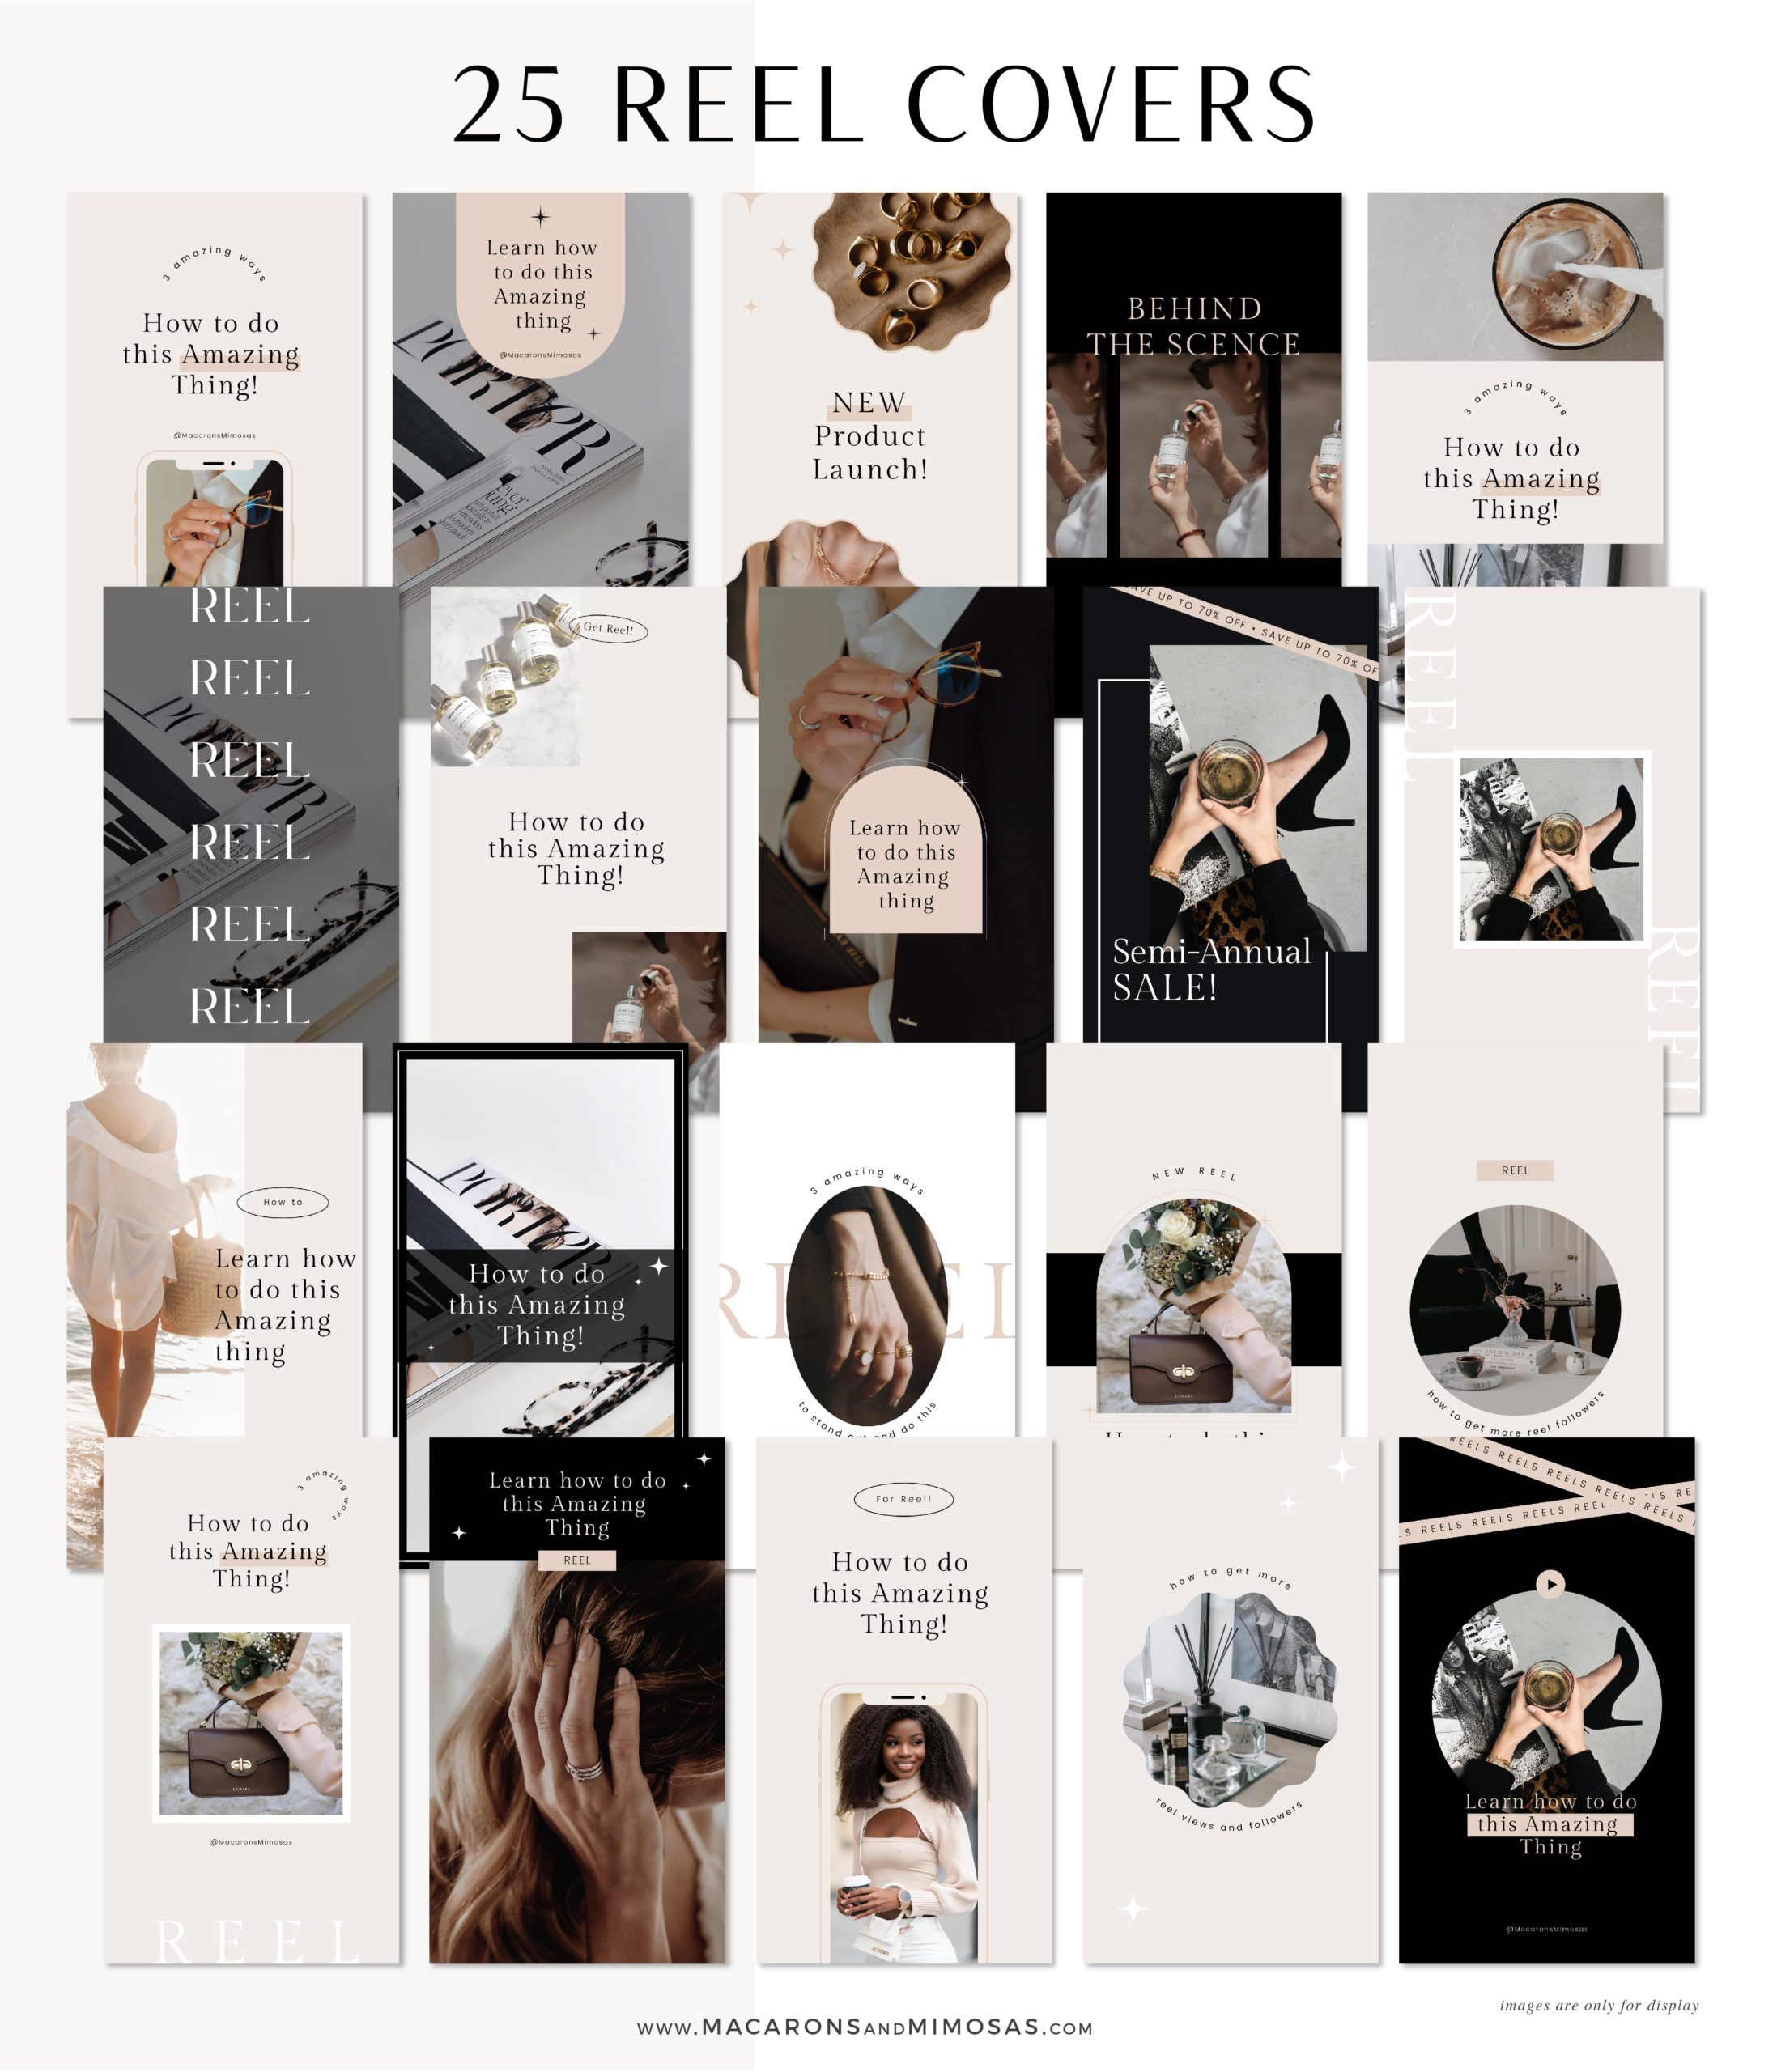 Minimalist Modern Instagram Reel Templates, Content Creator Reel Covers Editable in Canva, Instagram Stories, TikTok and Pinterest, Neutral Bundle